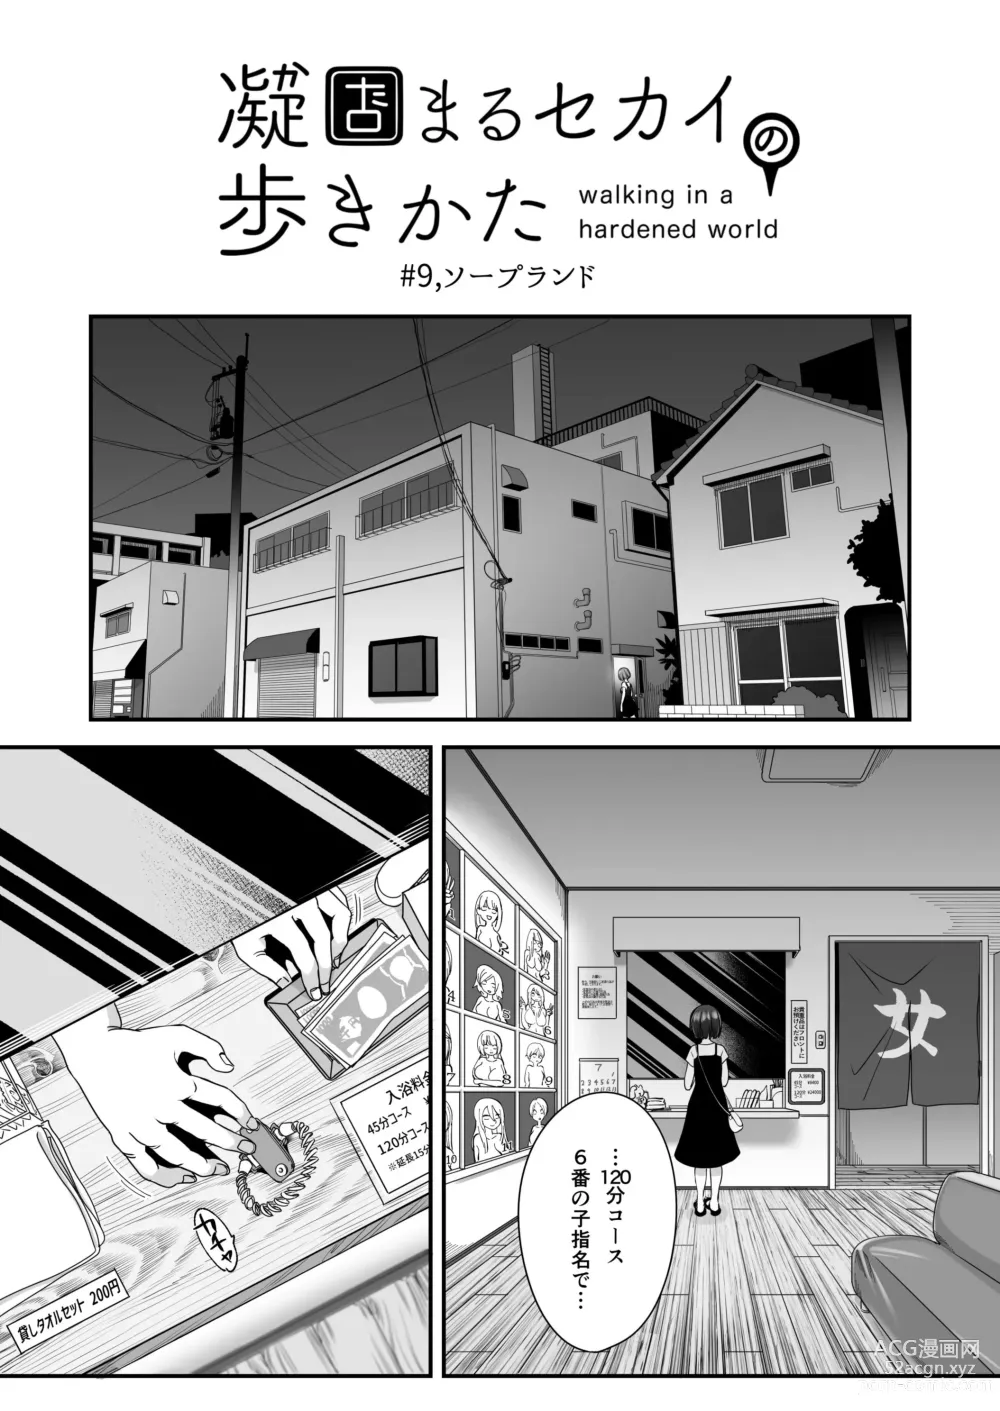 Page 2 of doujinshi Katamaru Sekai no Arukikata - walking in a hardened world #9